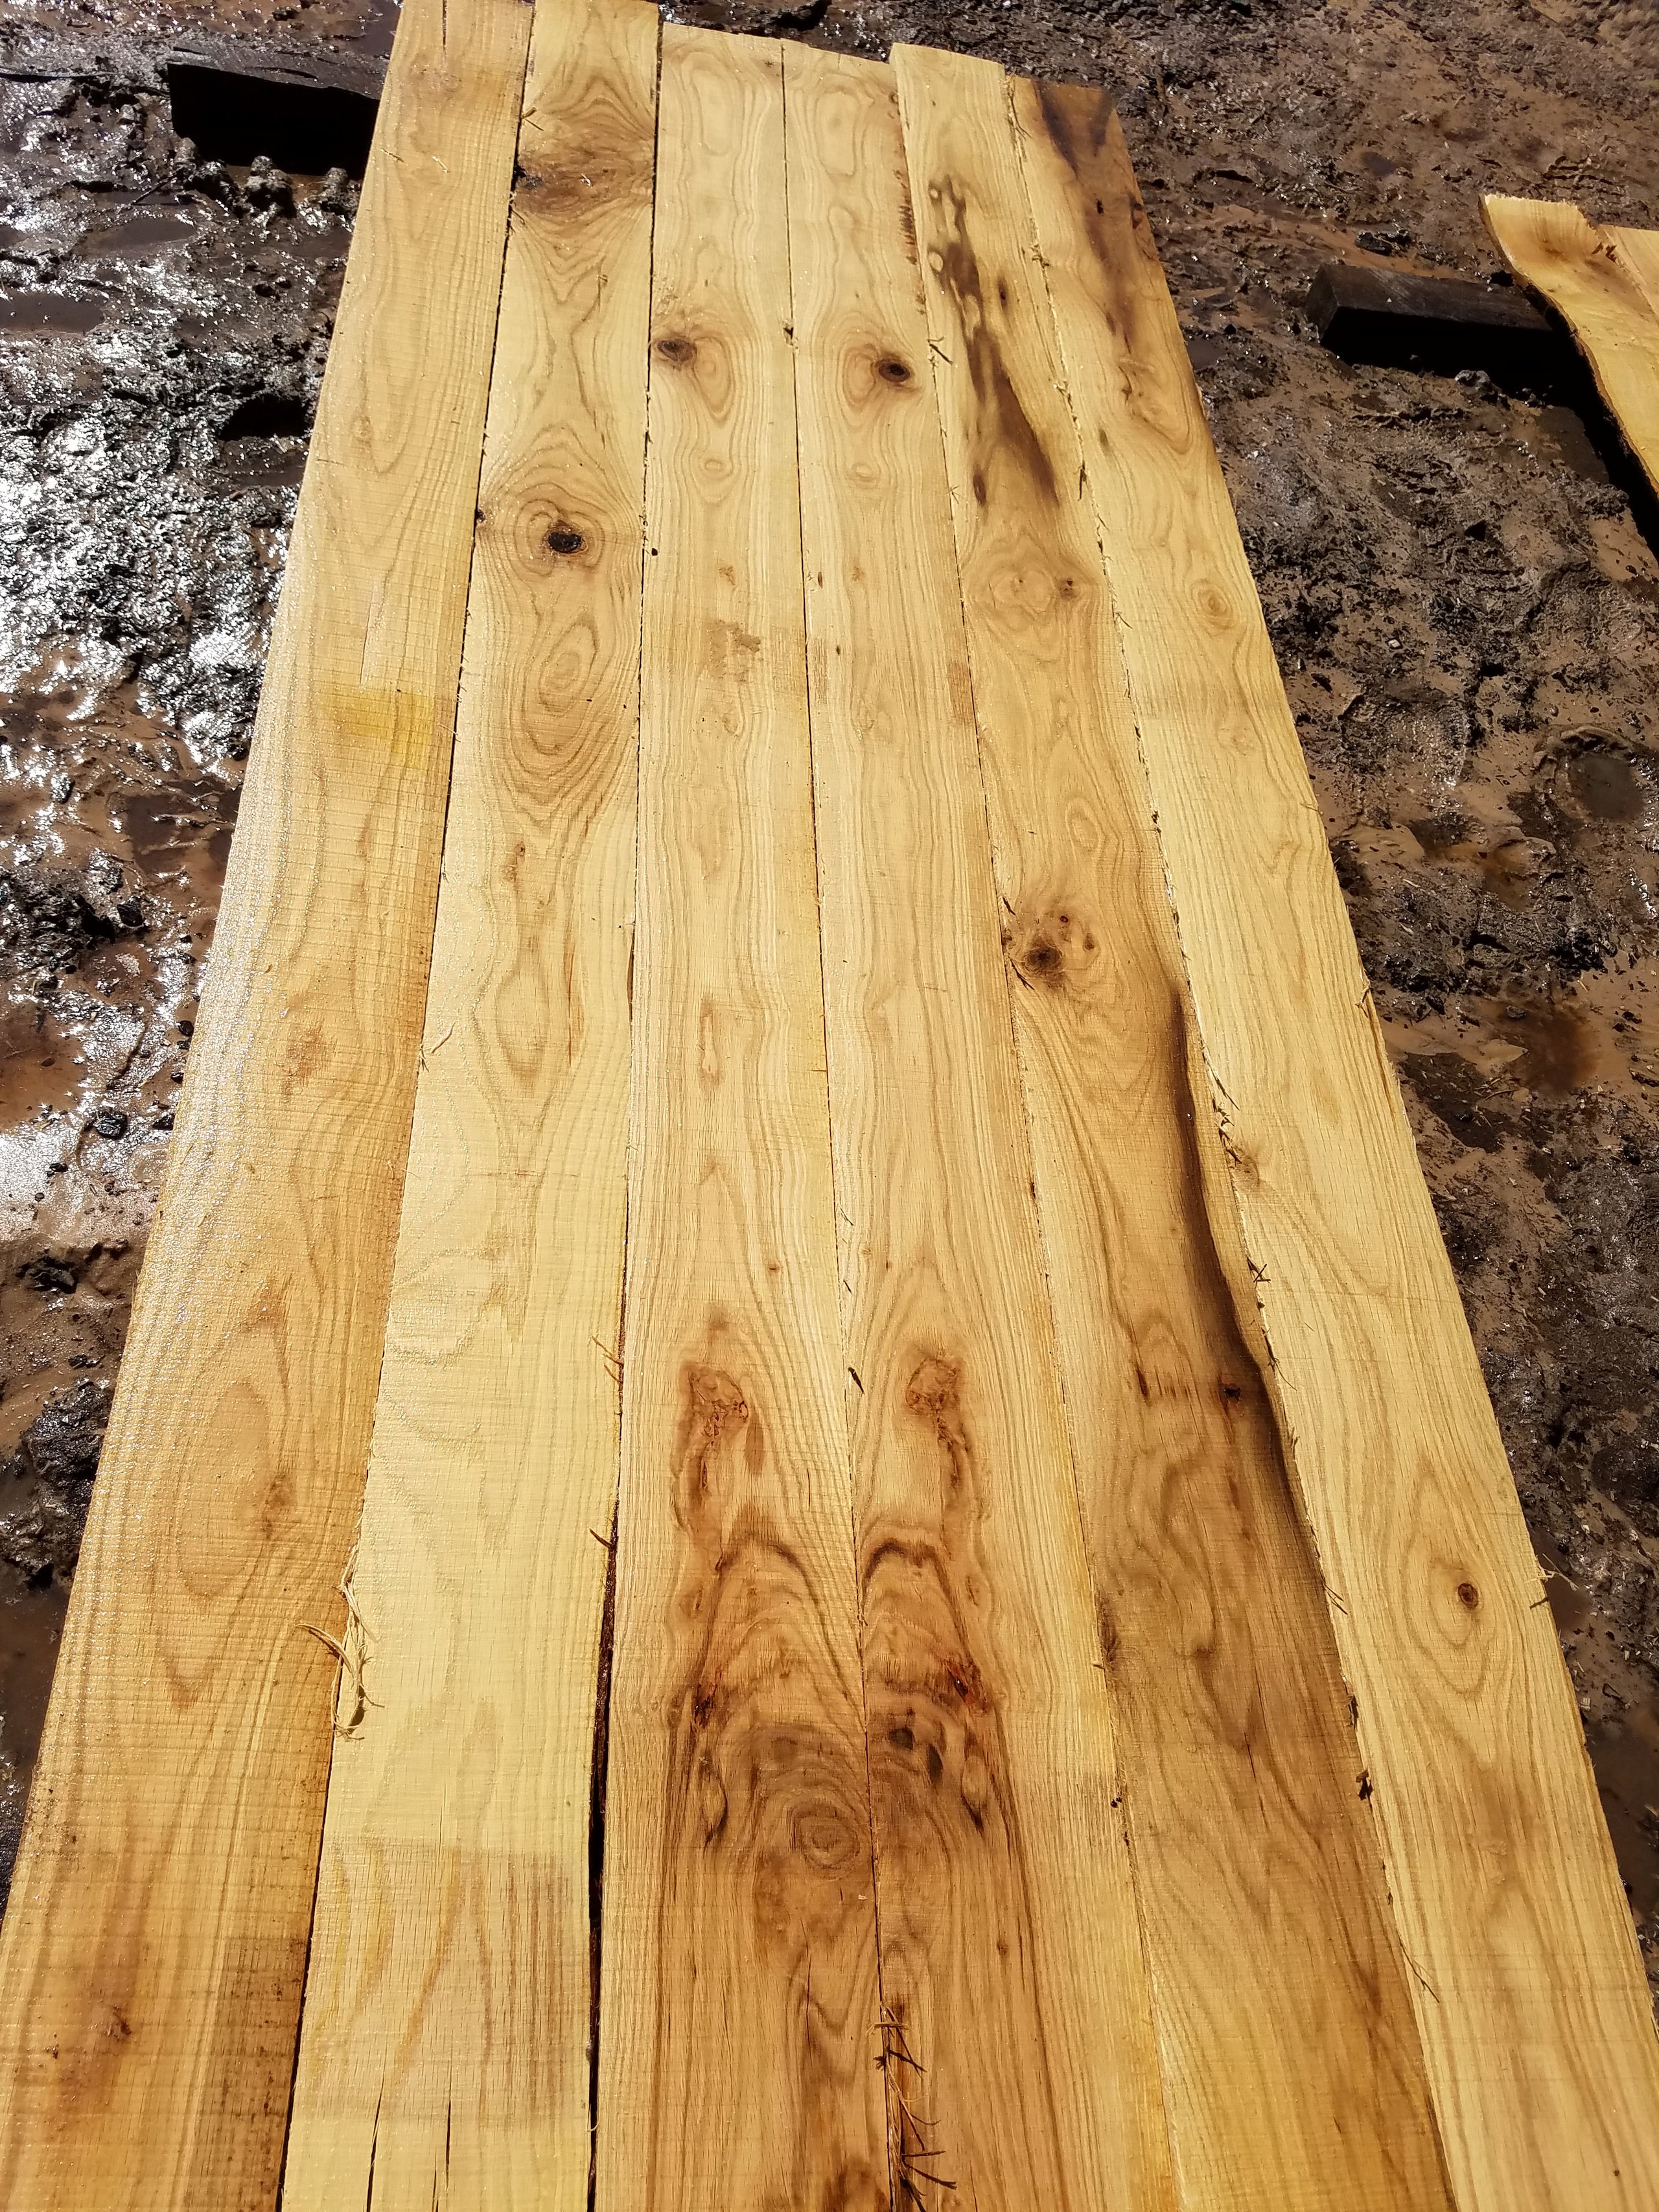 White Oak Thin Stock Lumber Boards Wood Crafts 1/2 x 6 x 48